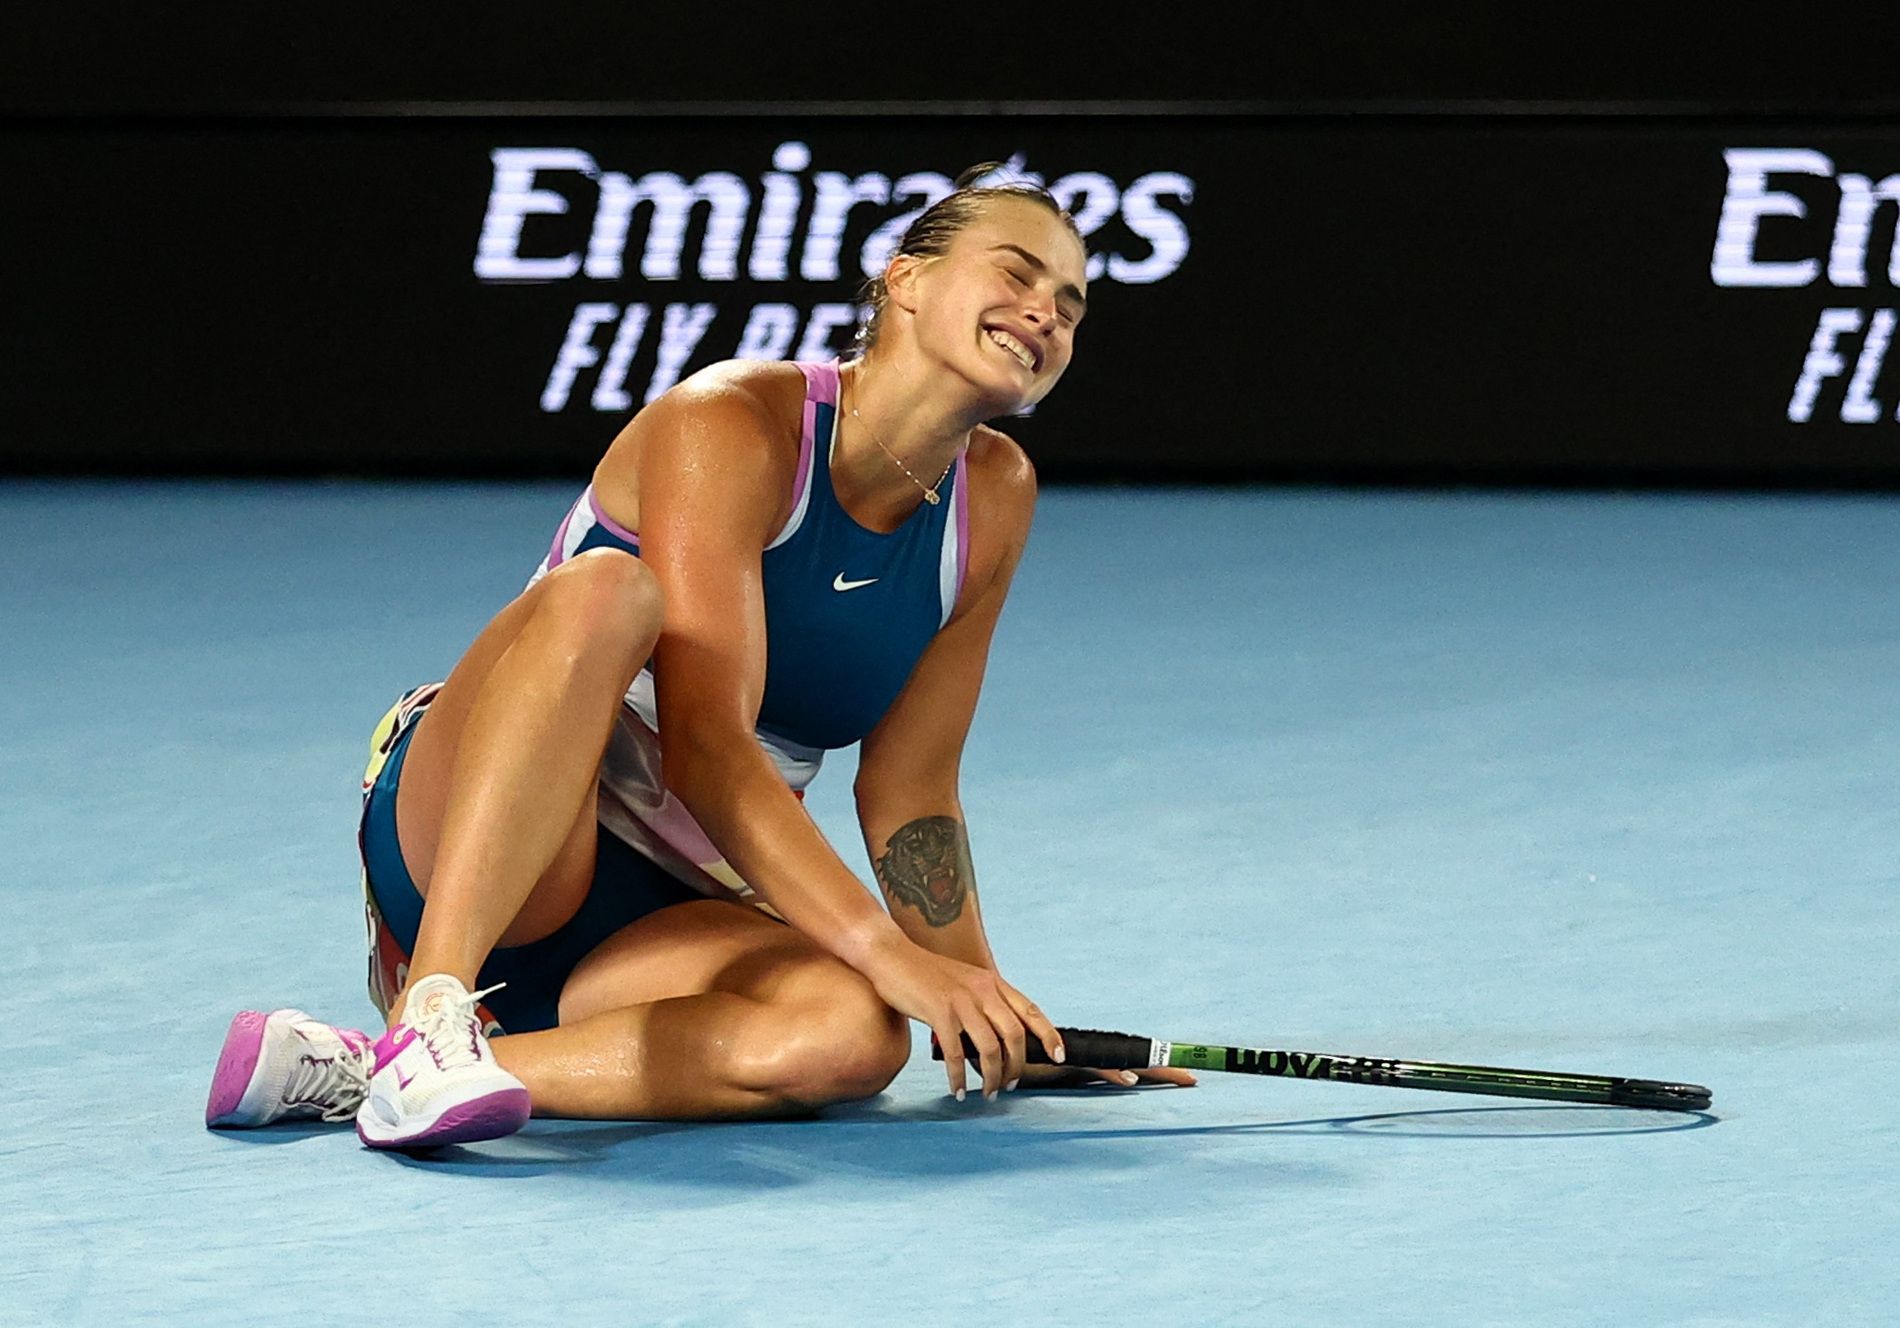 Sabalenkova dominated the Australian Open and won her first Grand Slam title